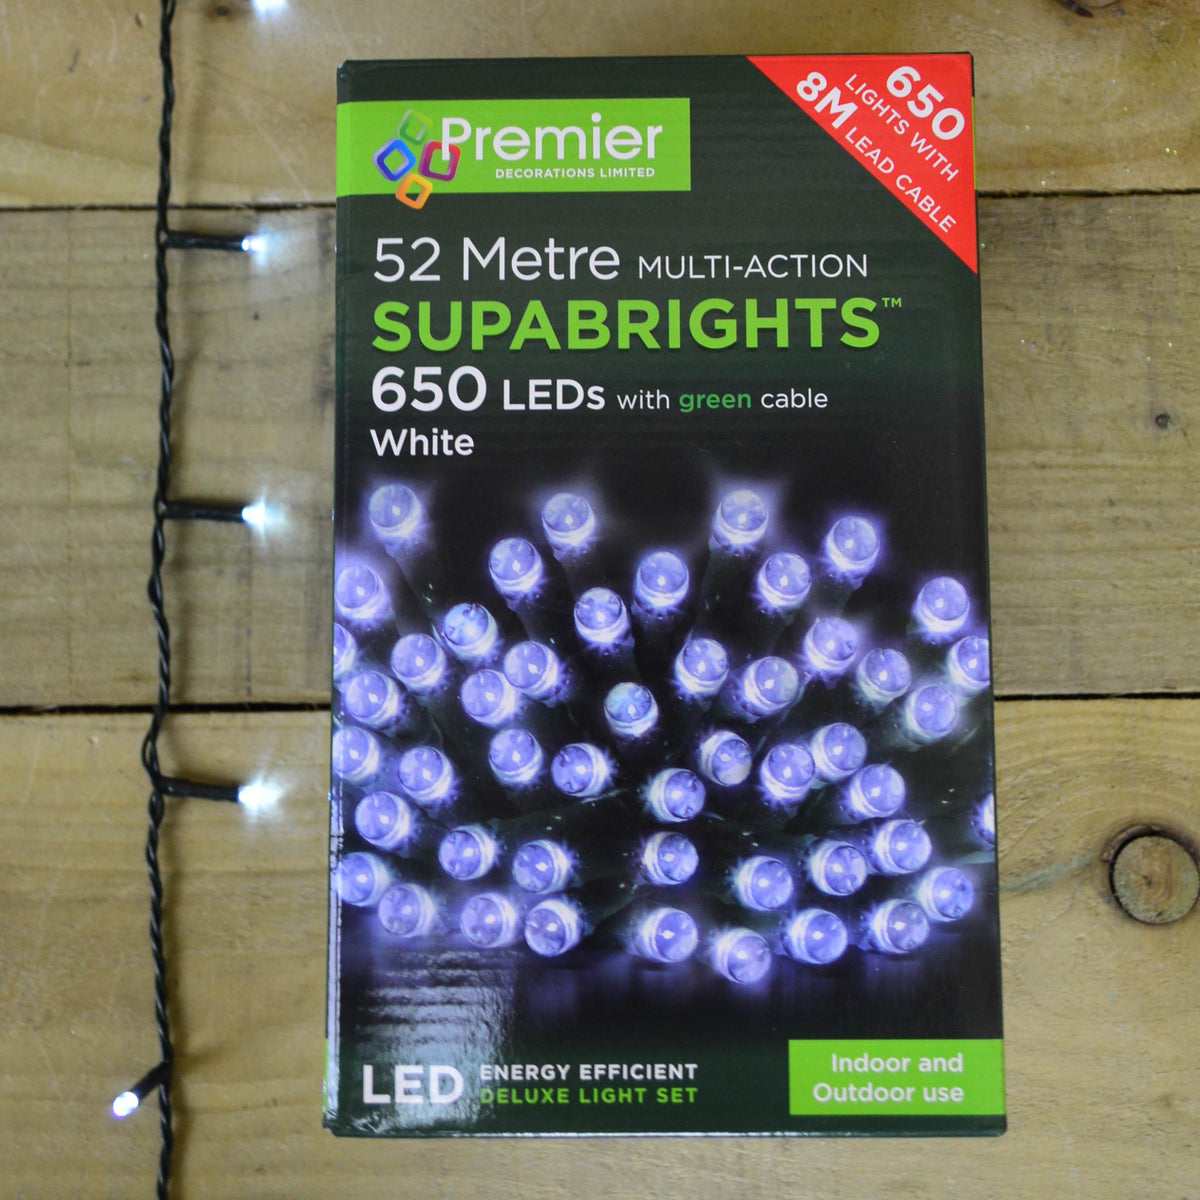 Premier Deluxe Light Set - 52m Multi Action 650 Cool White LED SUPABRIGHTS